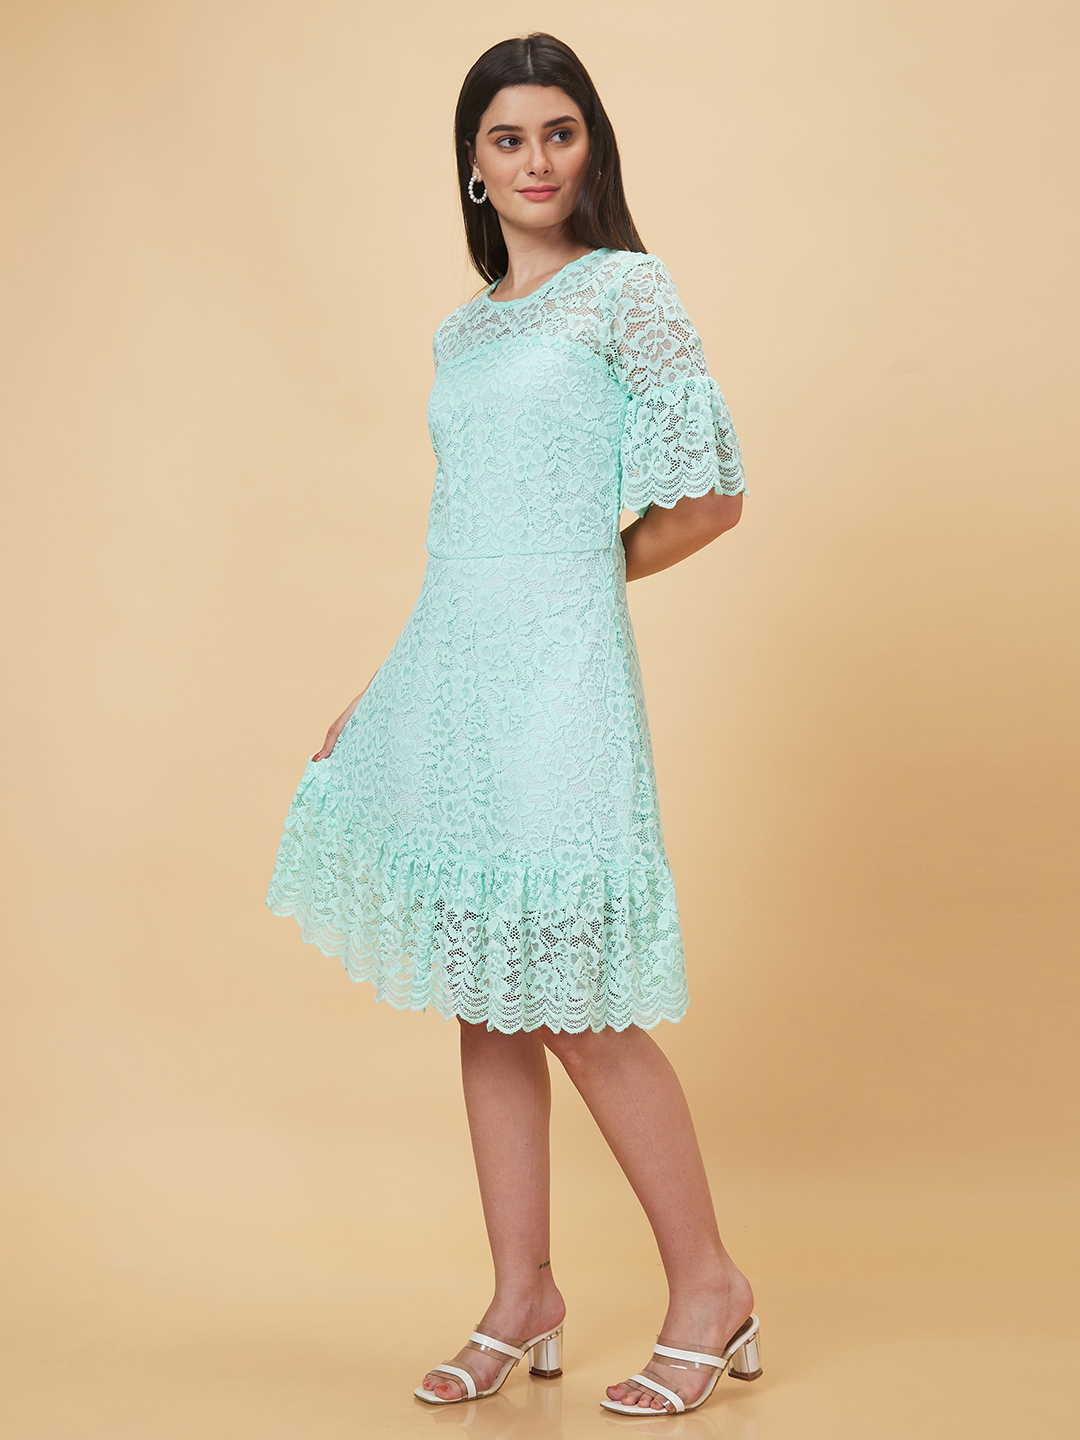 Globus Women Mint Green Floral Lace Design Flared Hem A-Line Dress